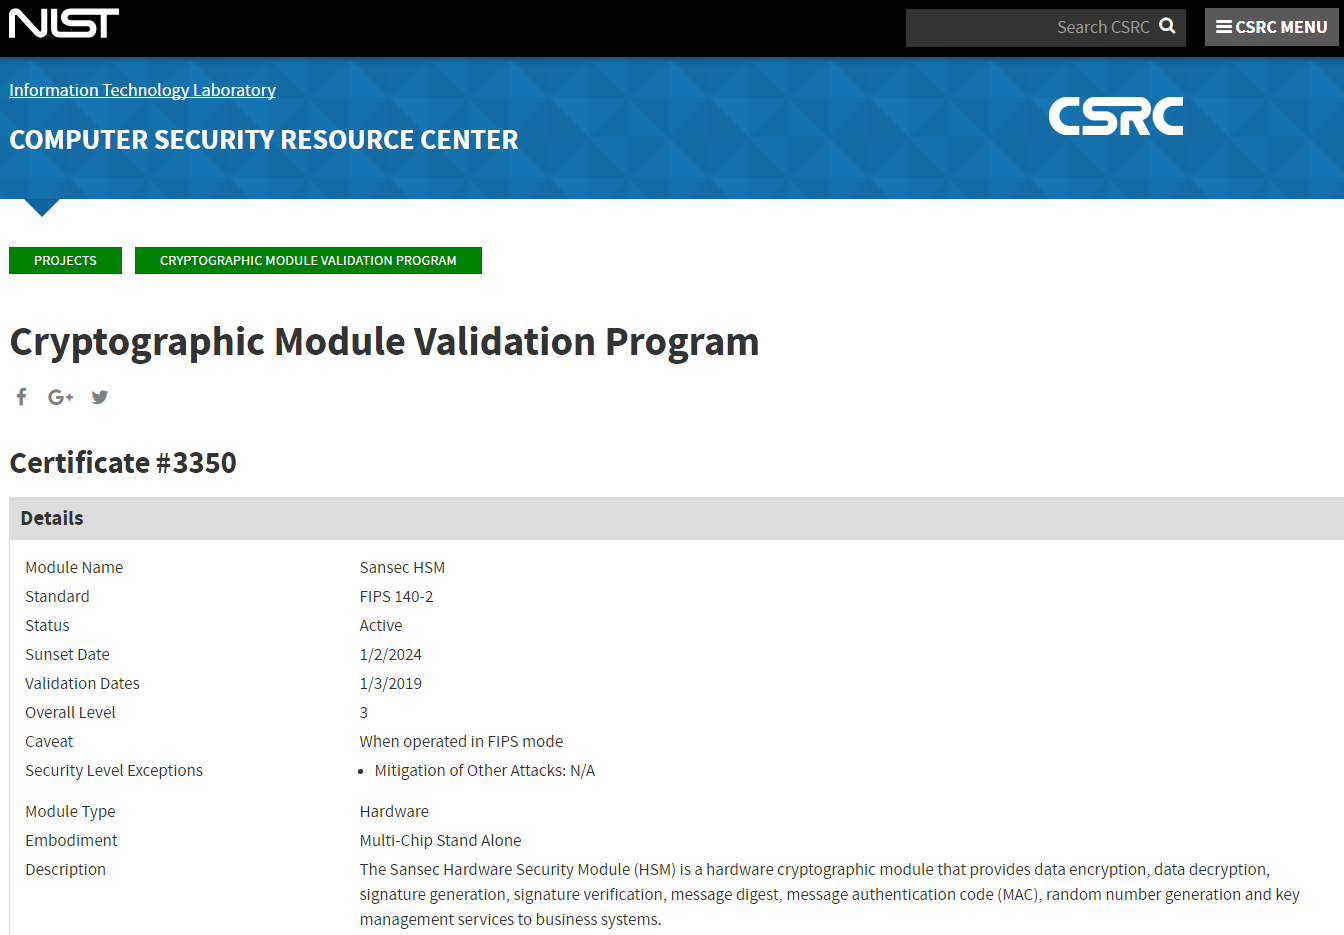 Sansec HSM  FIPS 140-2 Level 3 证书号#3350